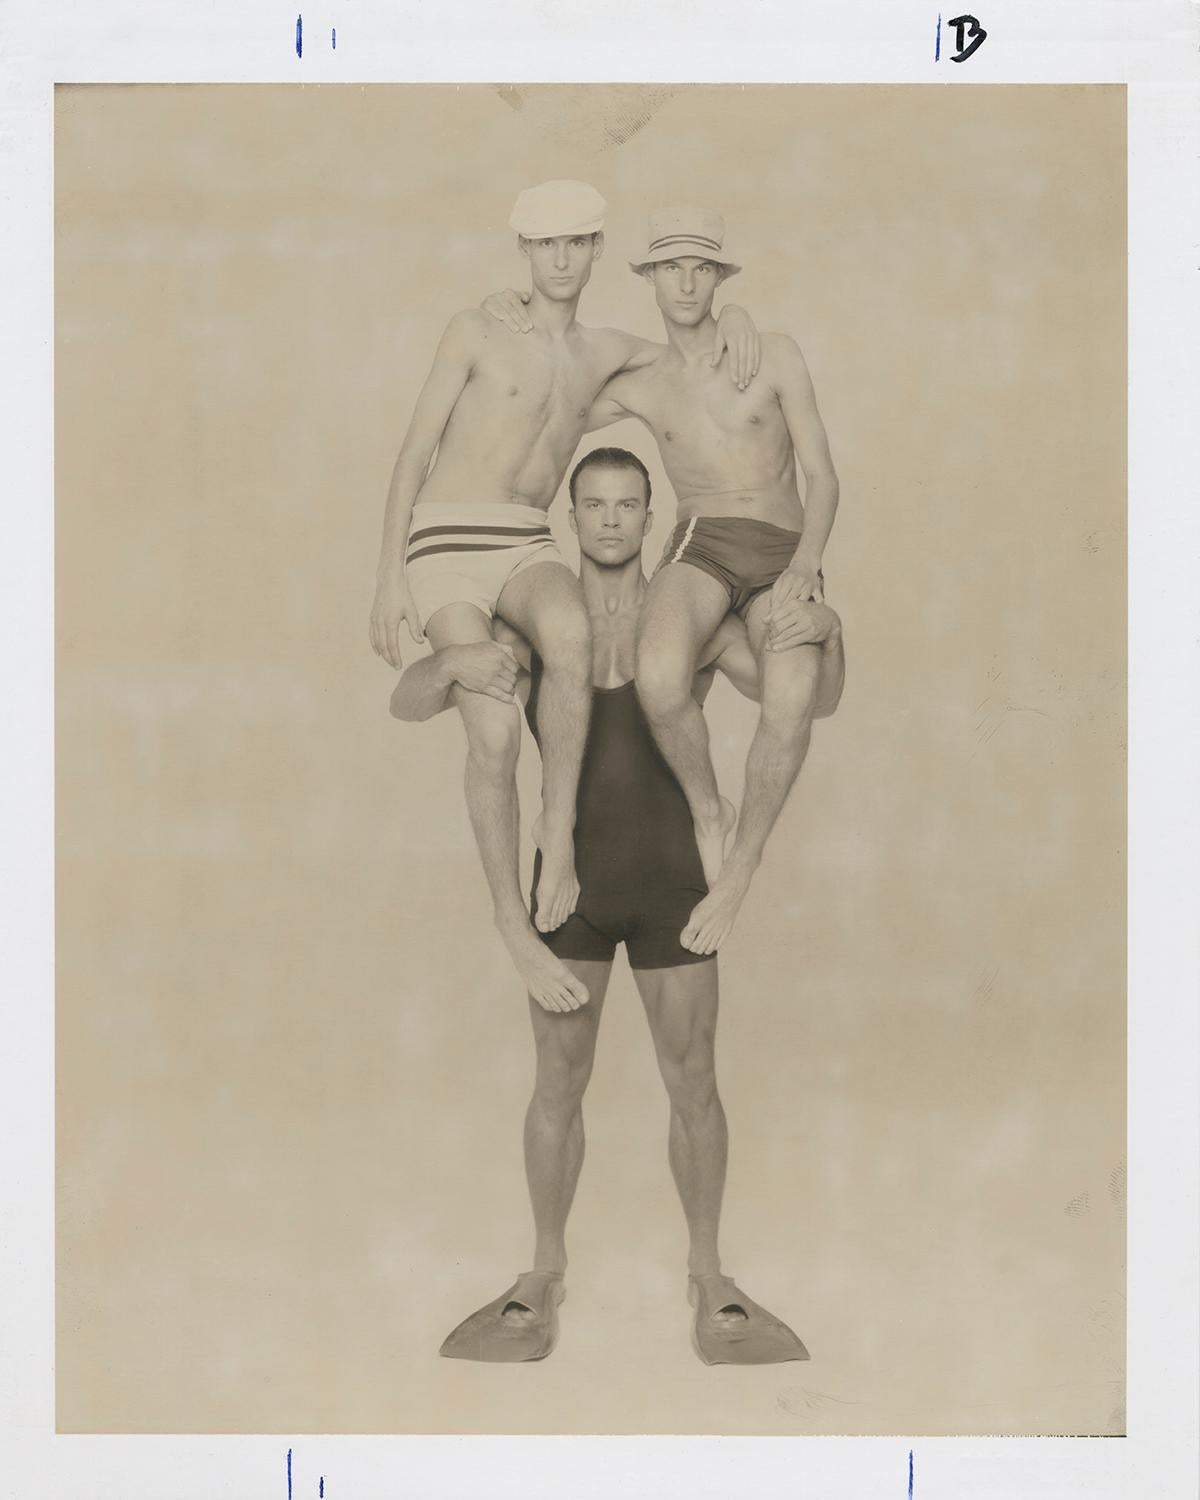 Jose Picayo Figurative Photograph - "Untitled (Boys on Shoulders)", New York, NY, 1995